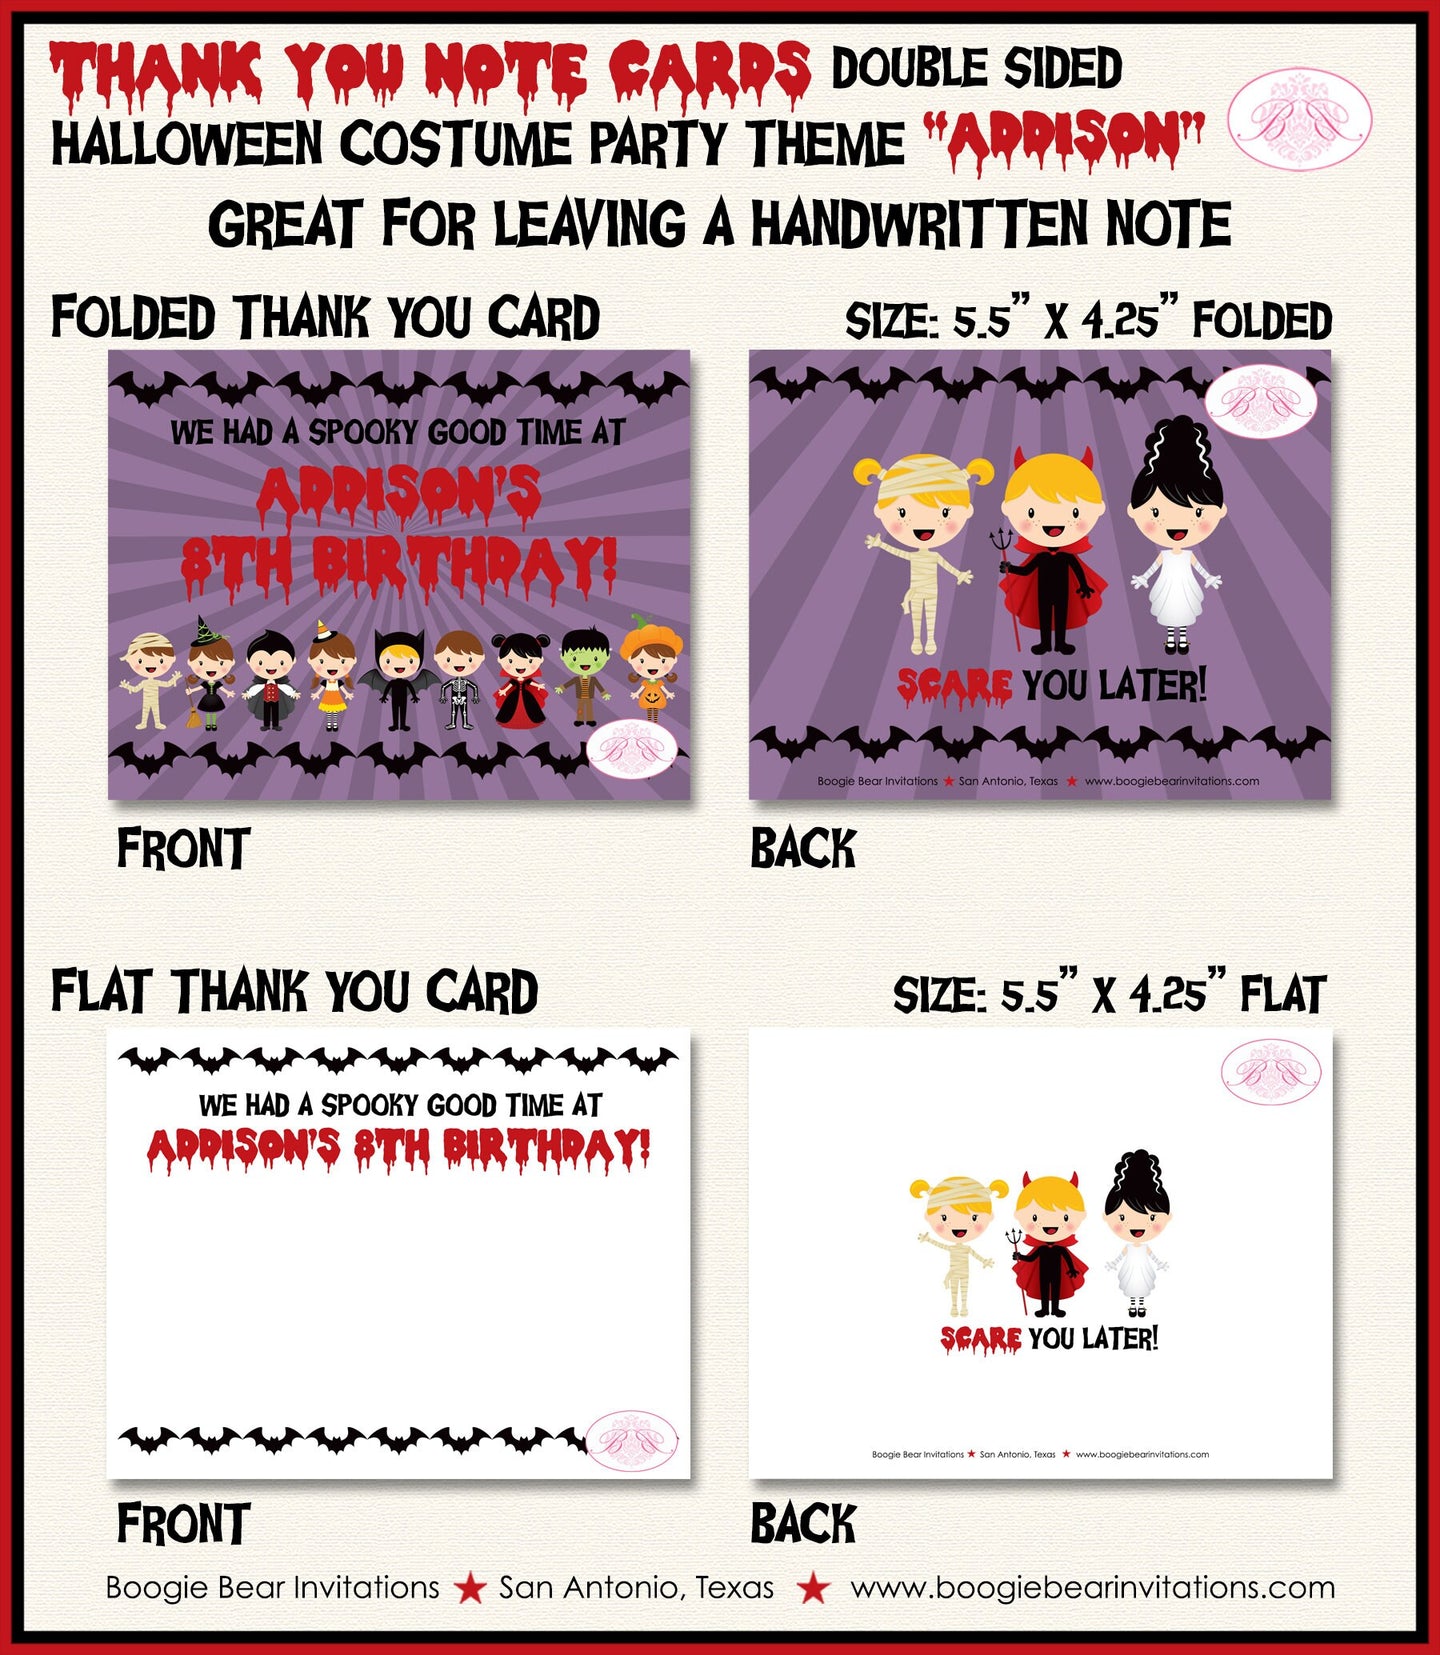 Halloween Birthday Party Thank You Card Costume Contest Boy Girl Retro Trick or Treat Bat Boogie Bear Invitations Addison Theme Printed